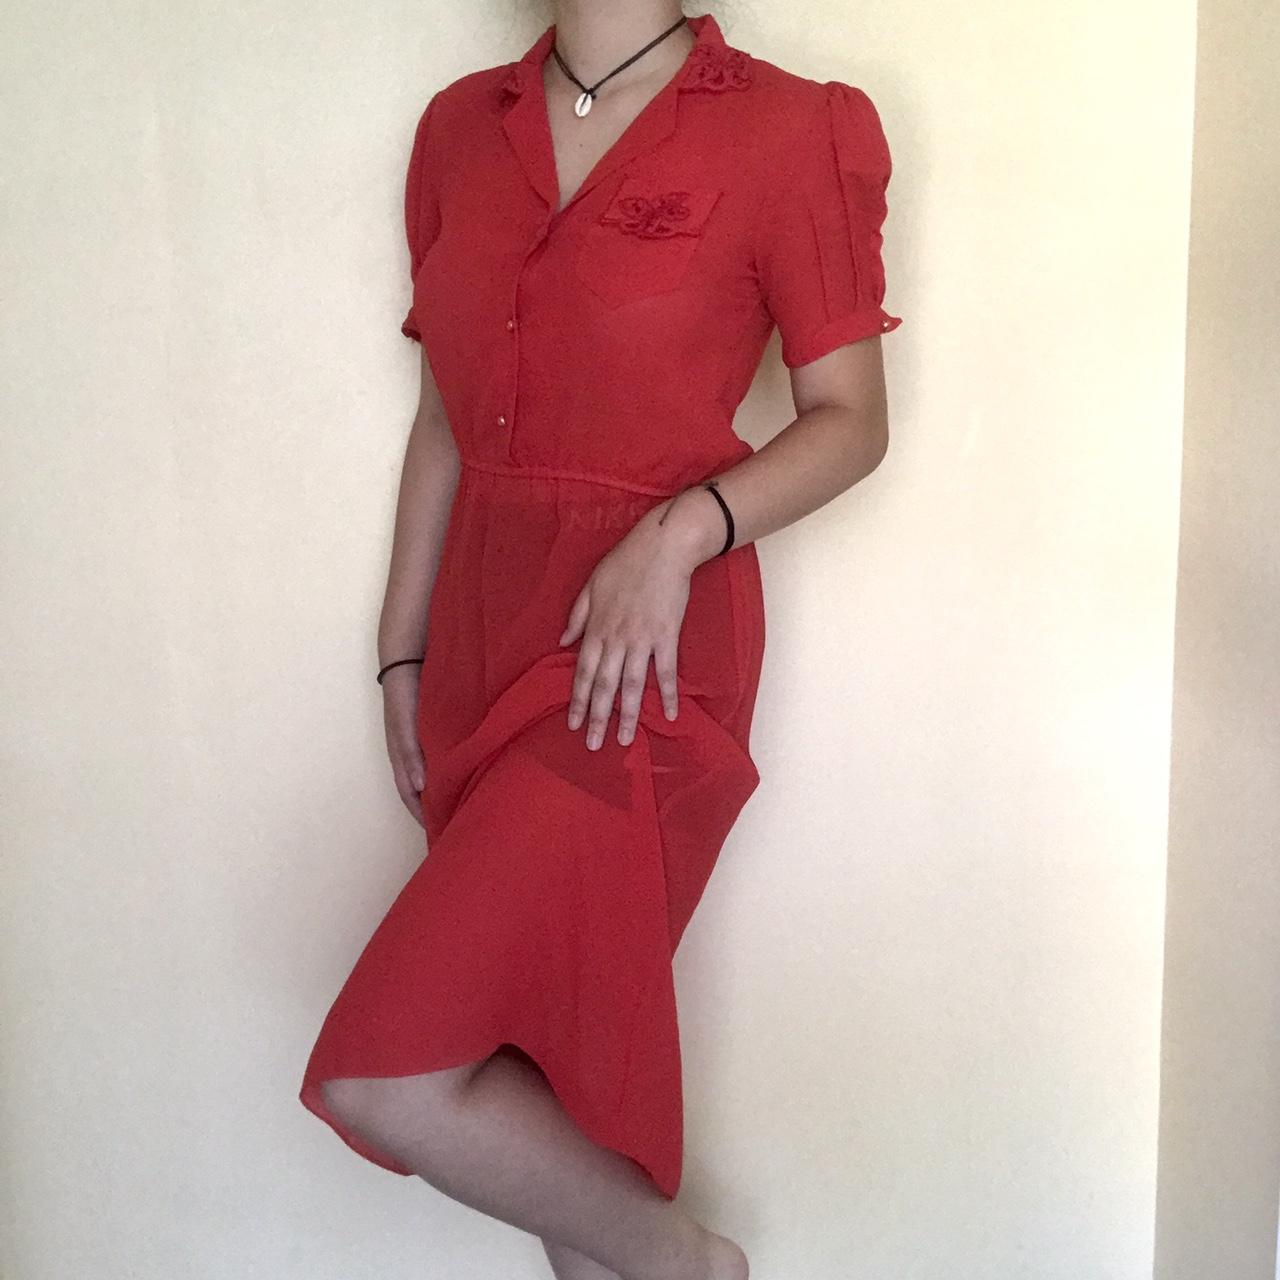 Vintage 40's Style Red Dress -Lovely semi-sheer... - Depop